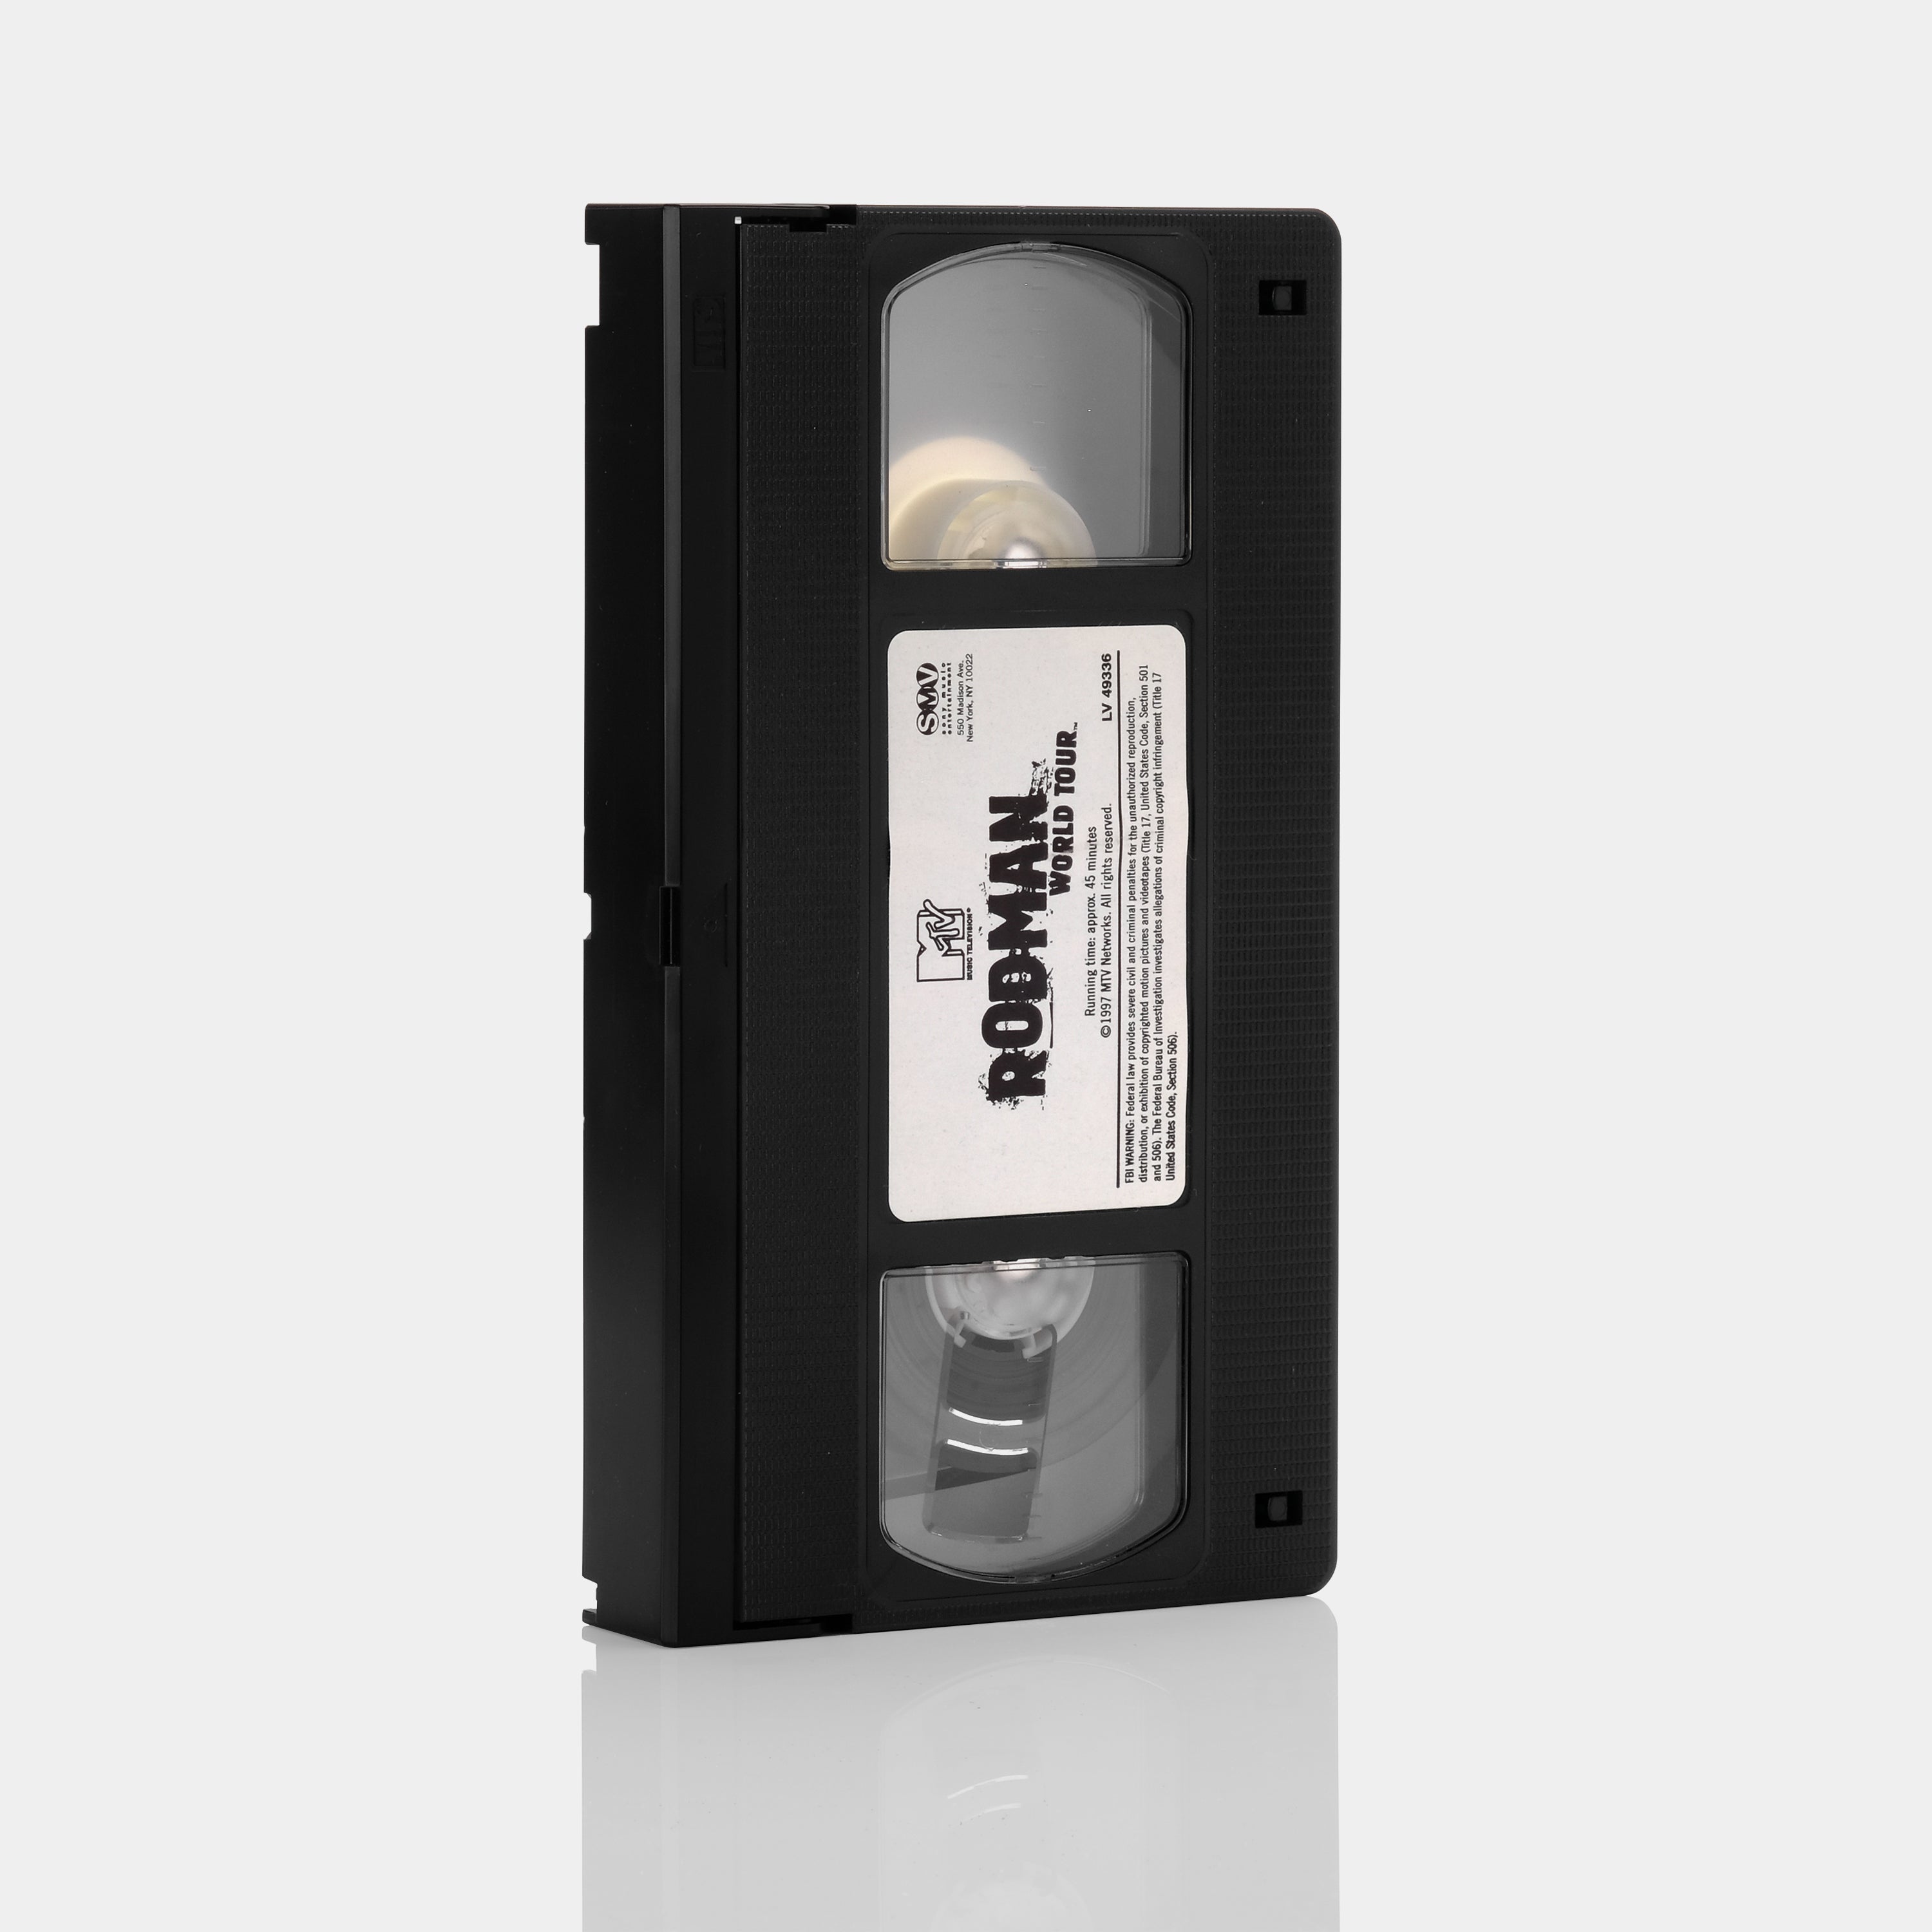 The Rodman World Tour VHS Tape